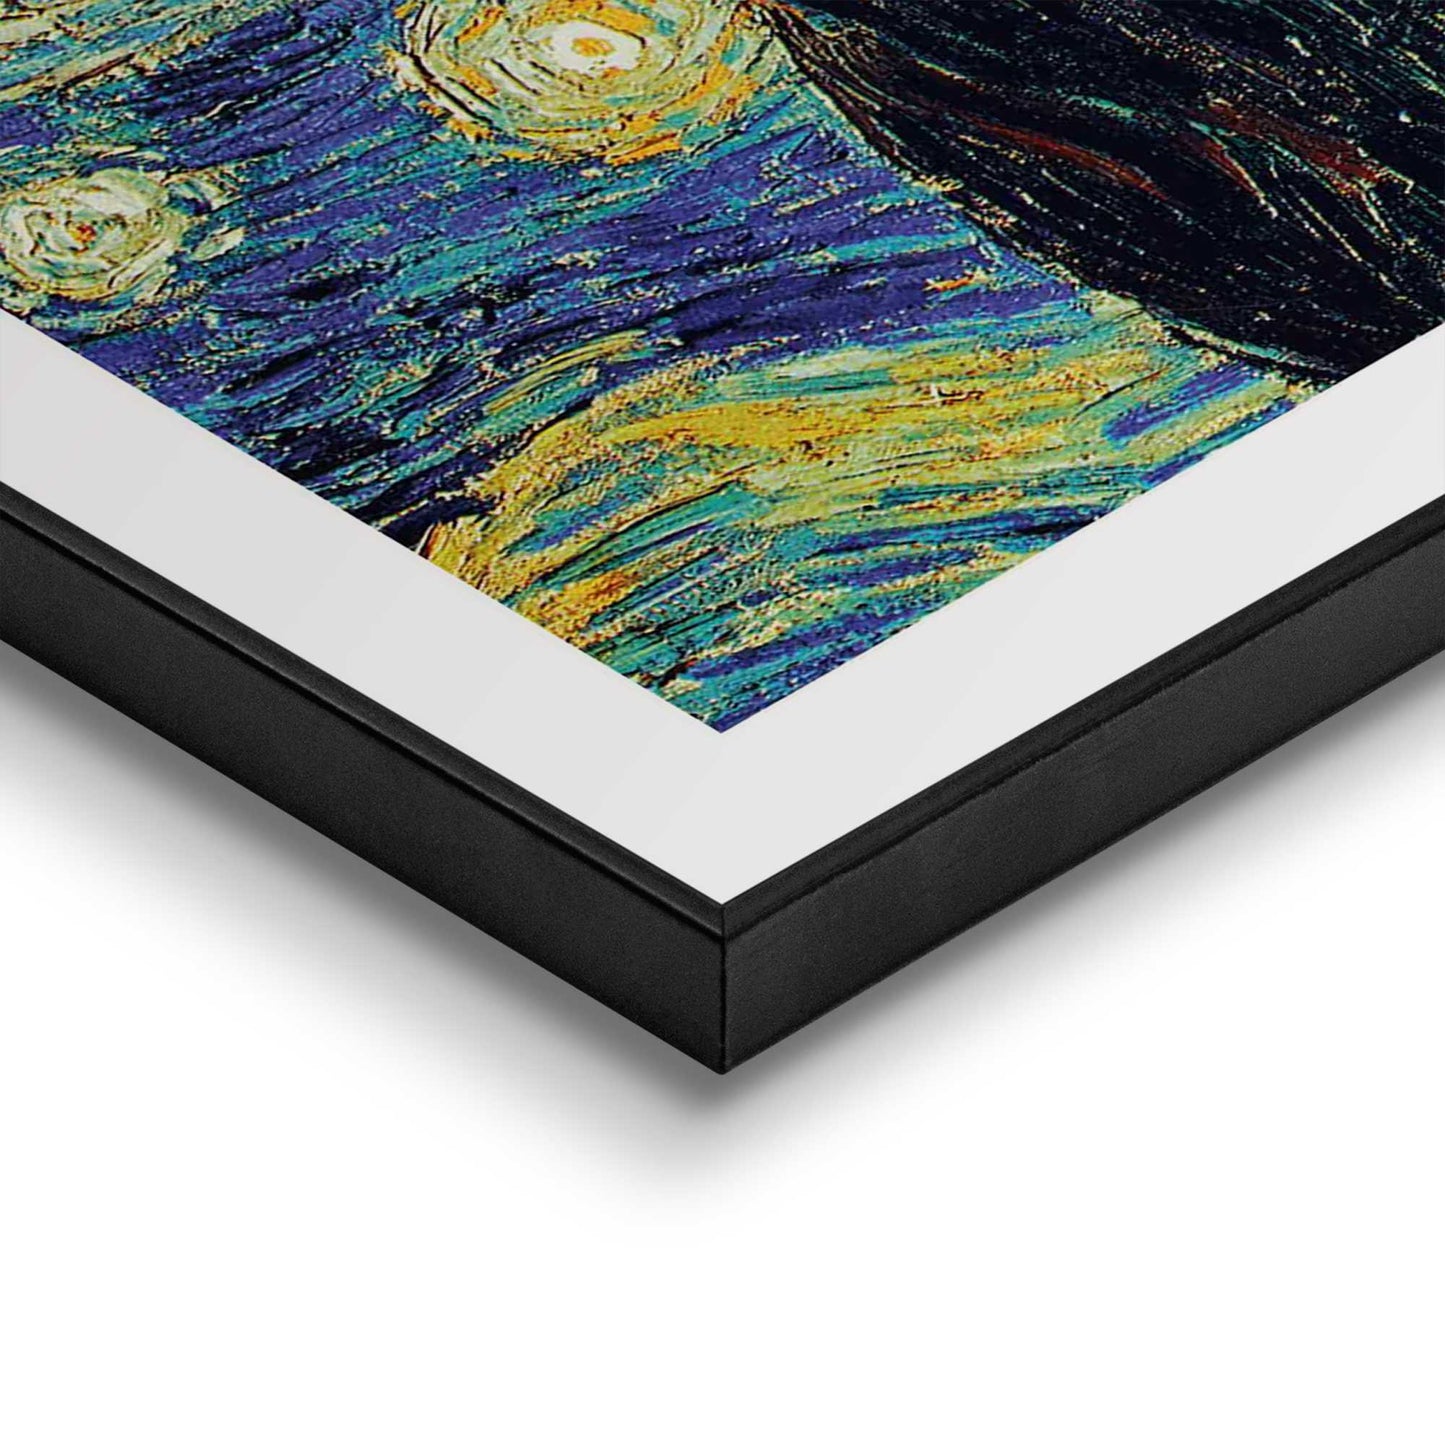 Framed in Wood Van Gogh - the starry night 40x30